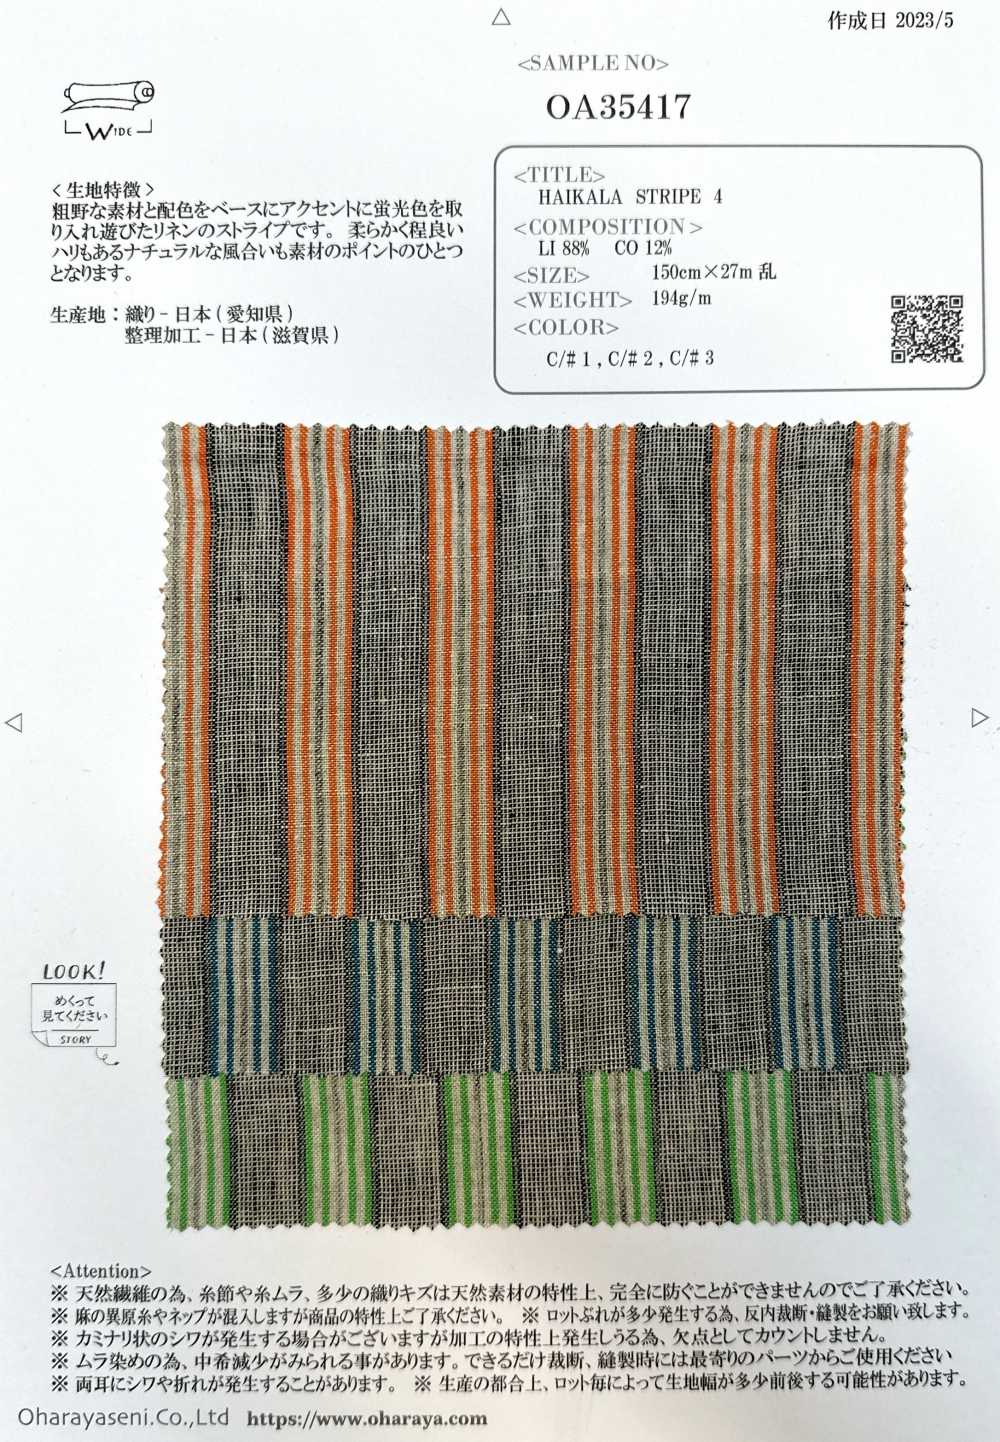 OA35417 RAYURE HAIKARA 4[Fabrication De Textile] Oharayaseni